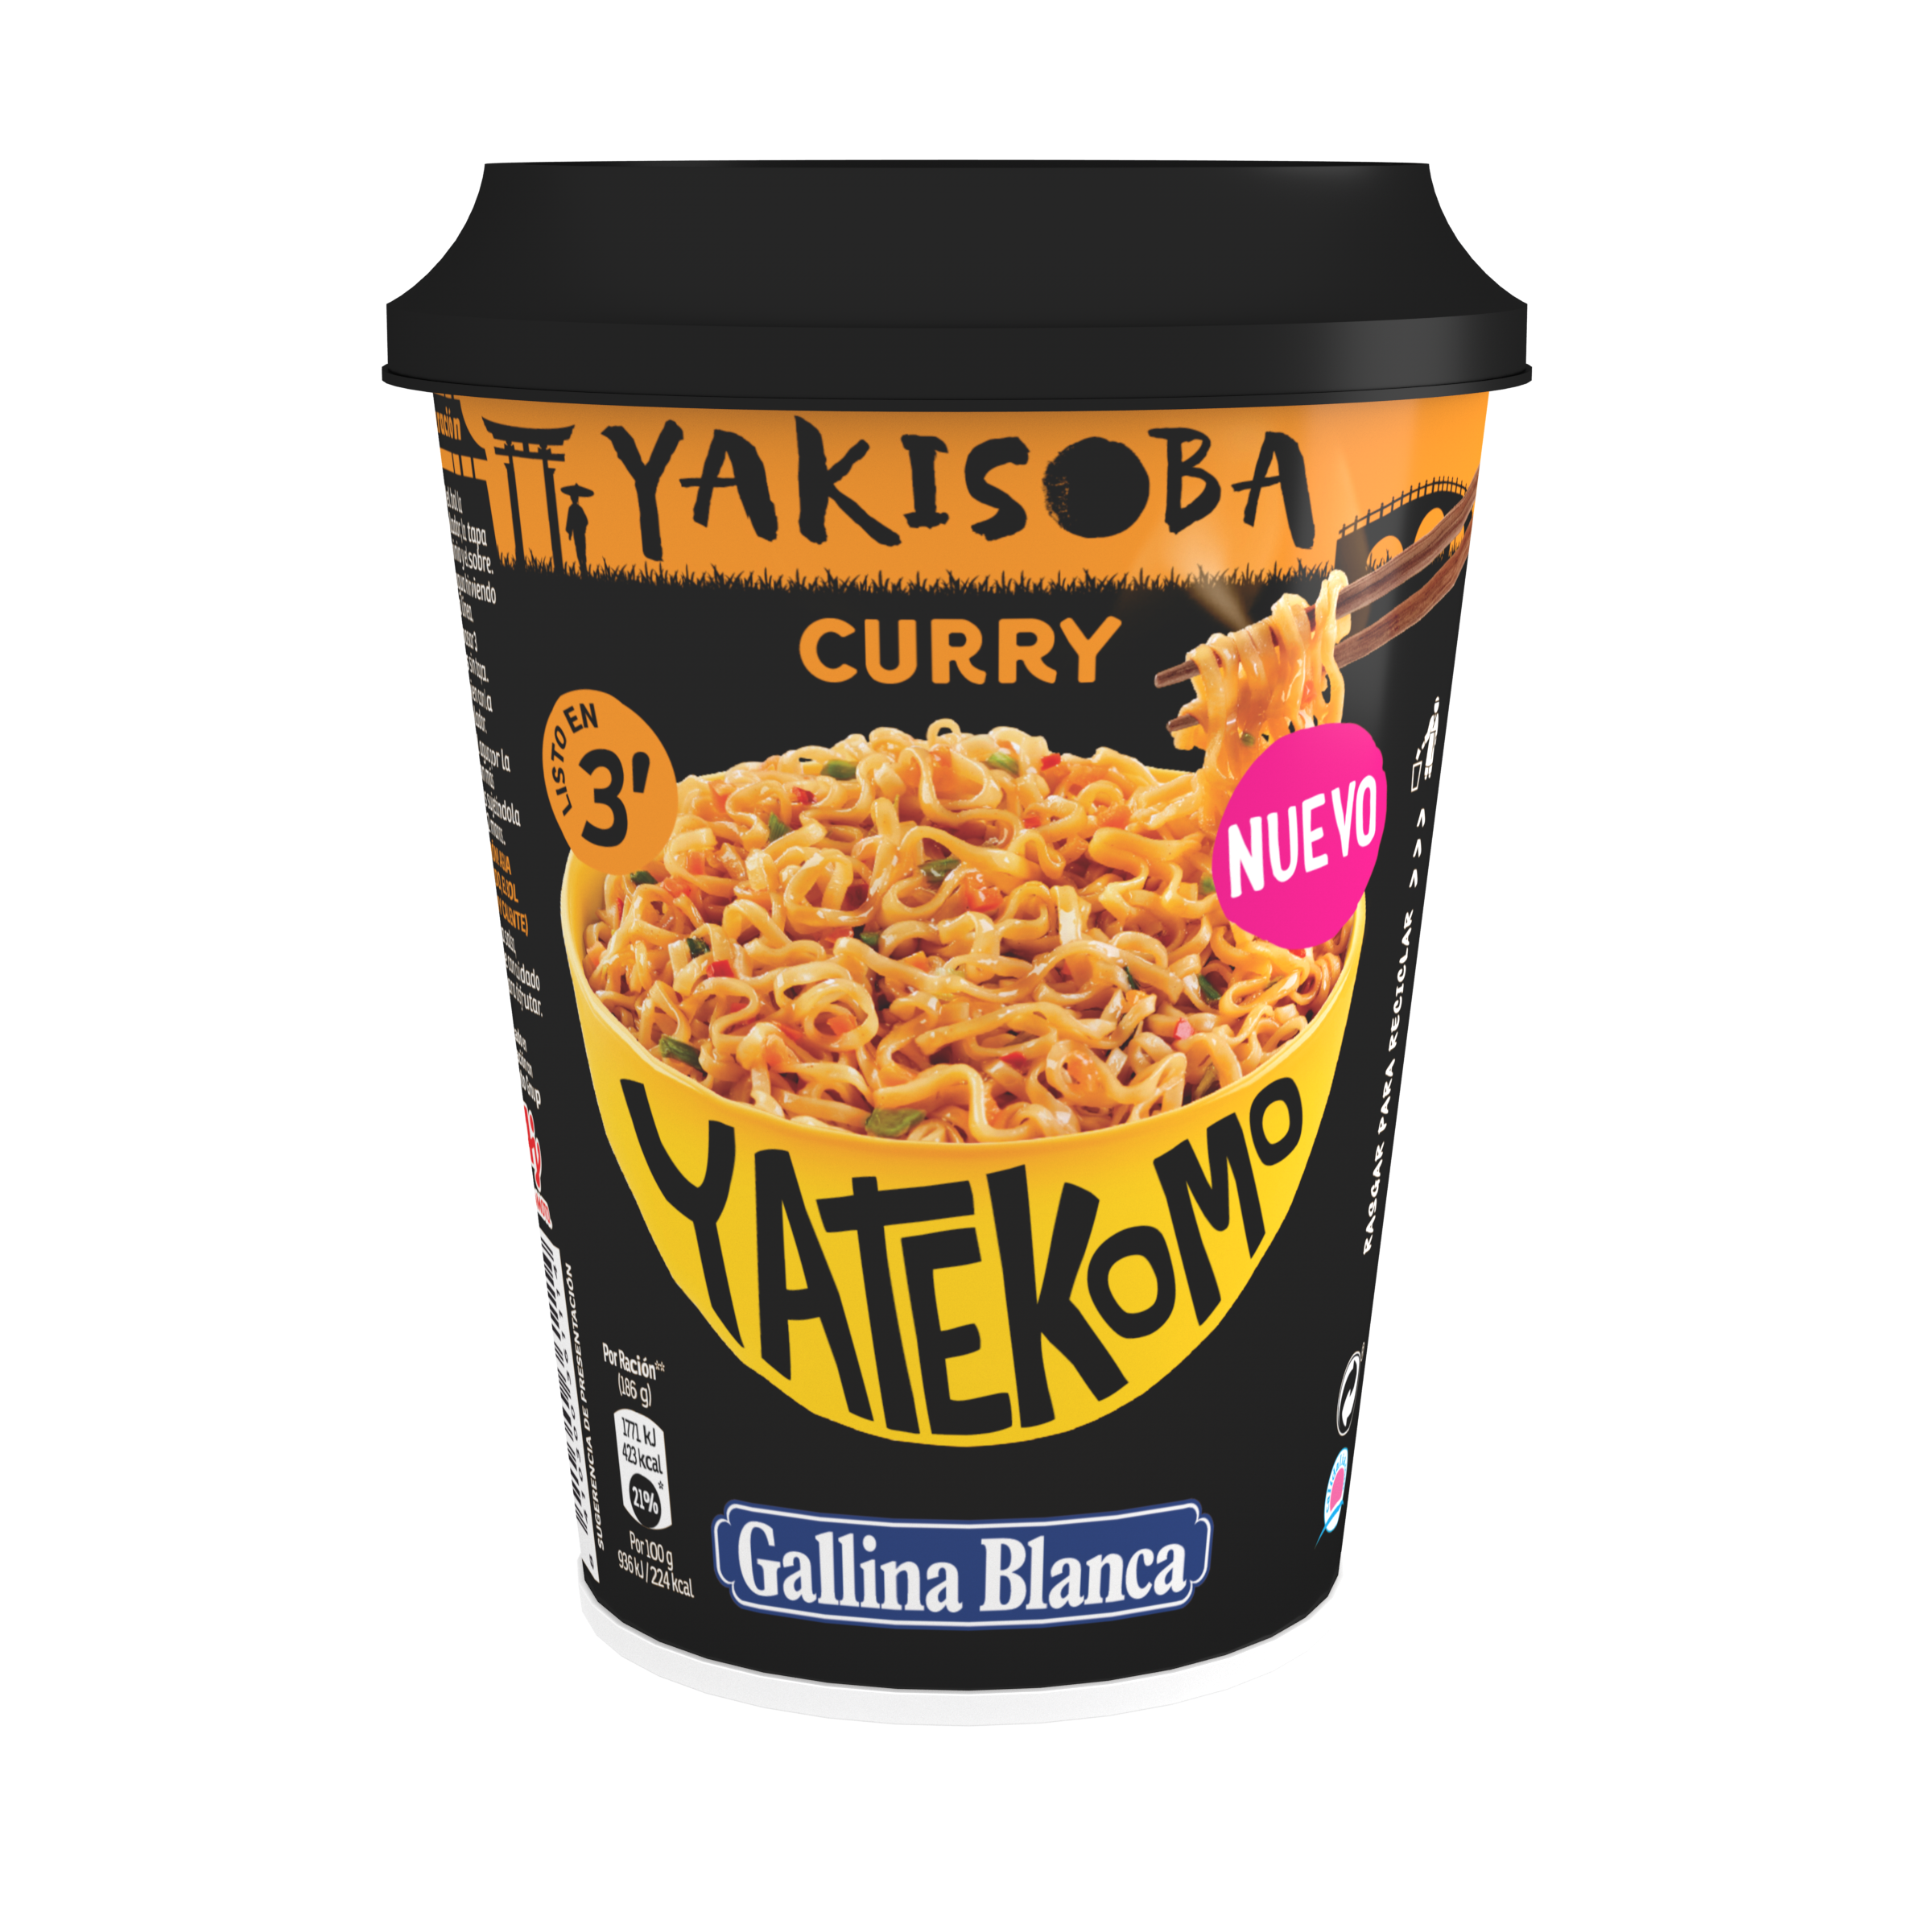 Yatekomo Yakisoba Curry